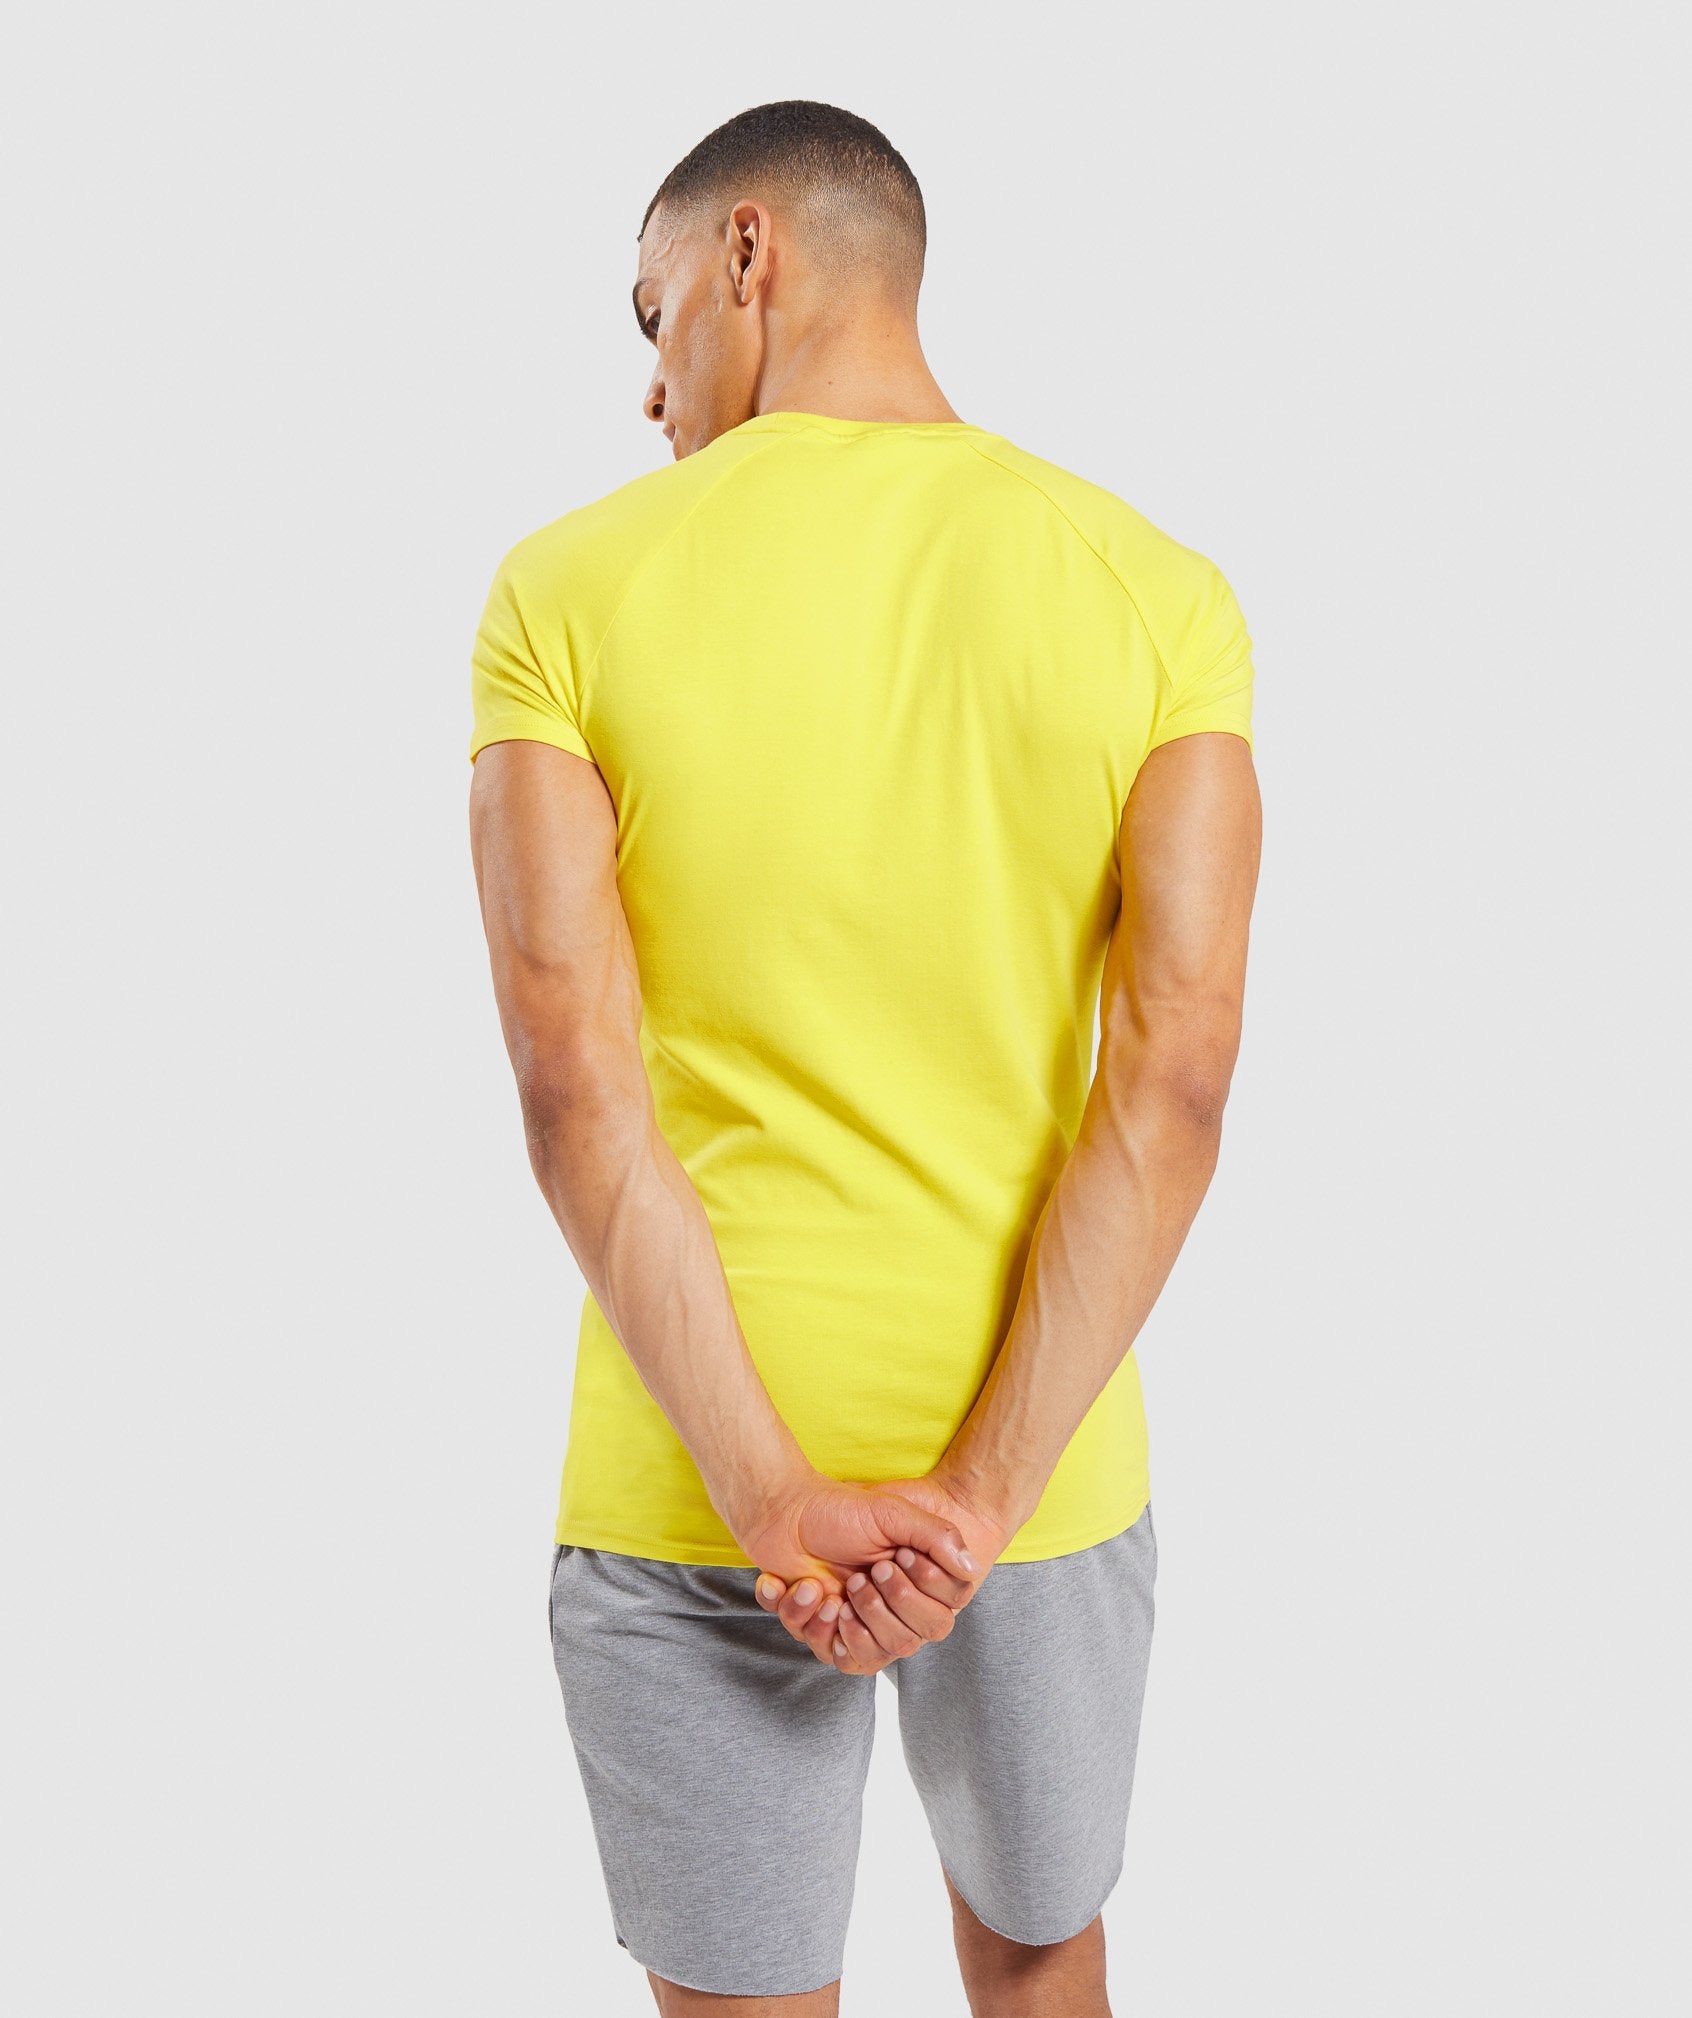 Apollo T-Shirt in Yellow - view 2